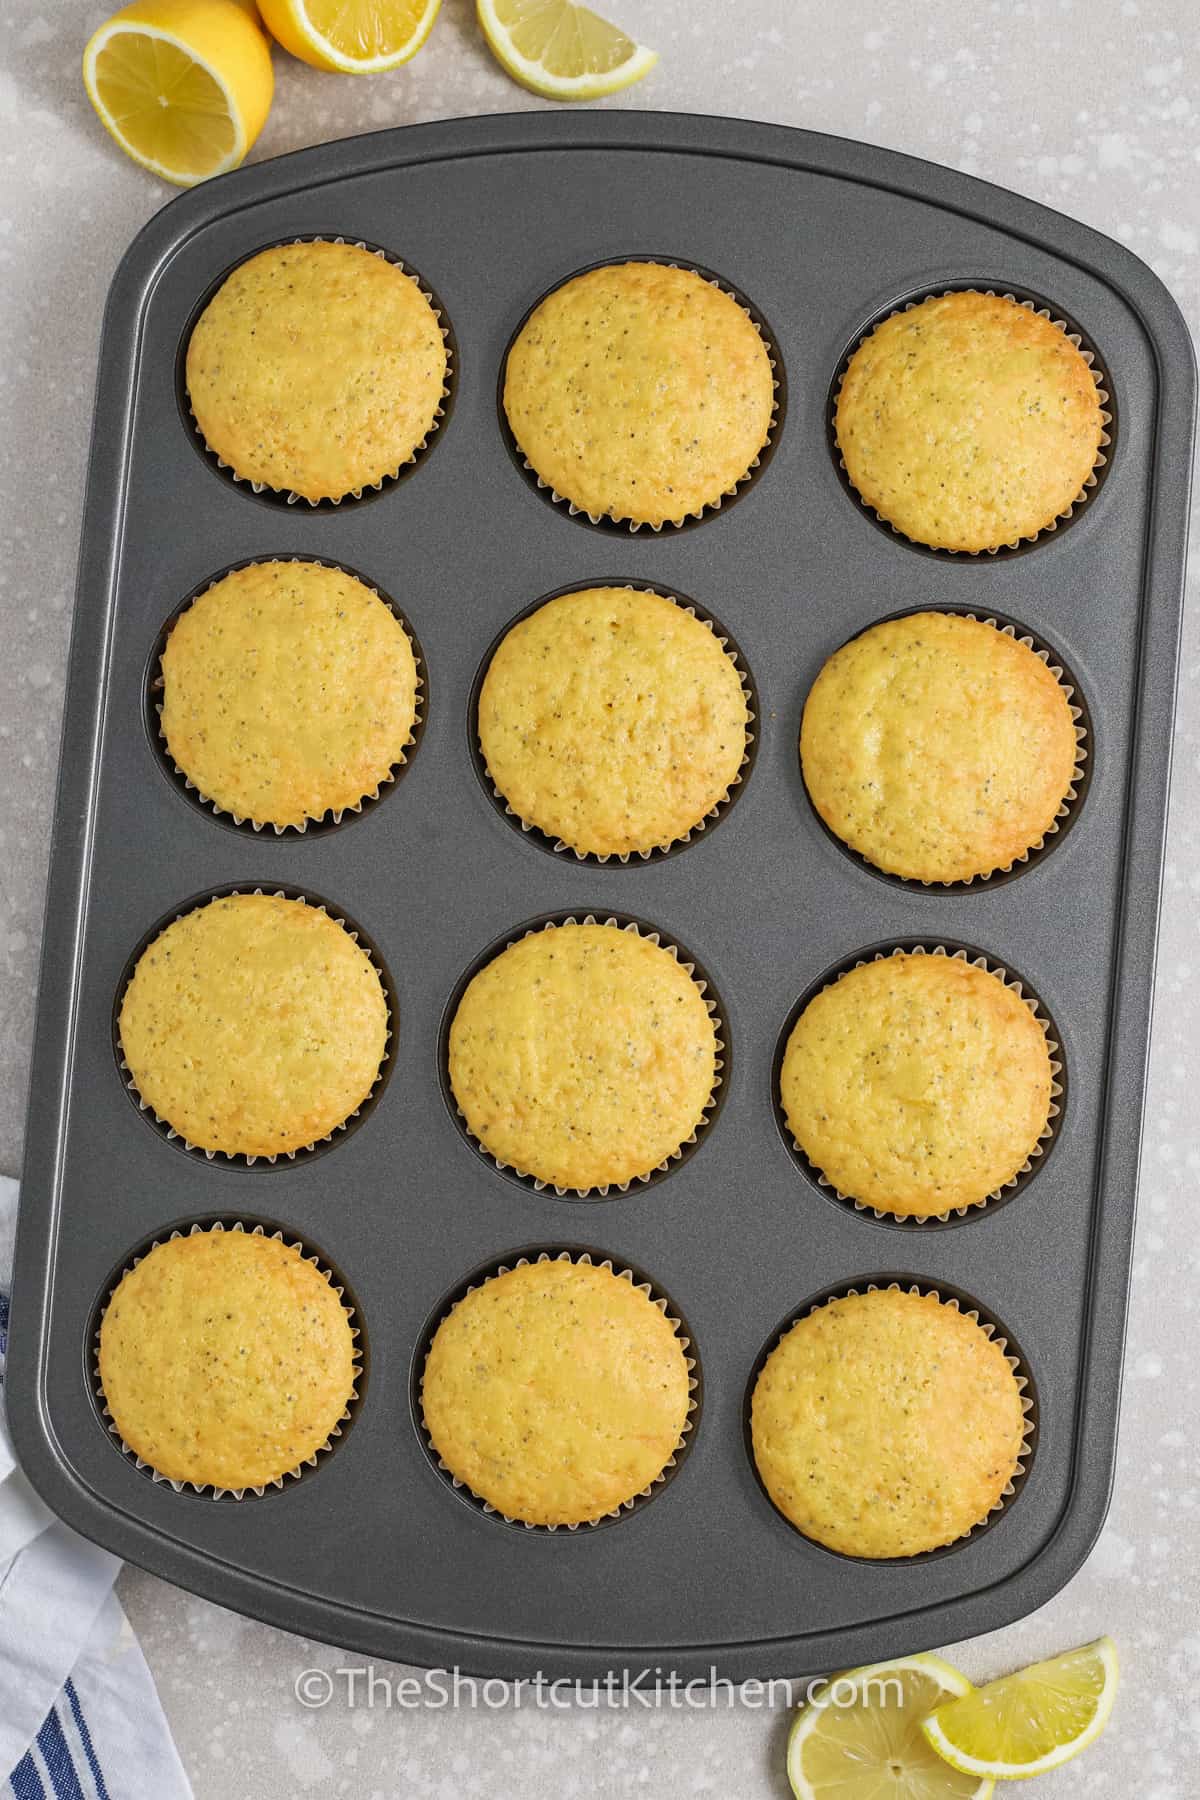 Lemon poppyseed muffin baked in a muffin tin